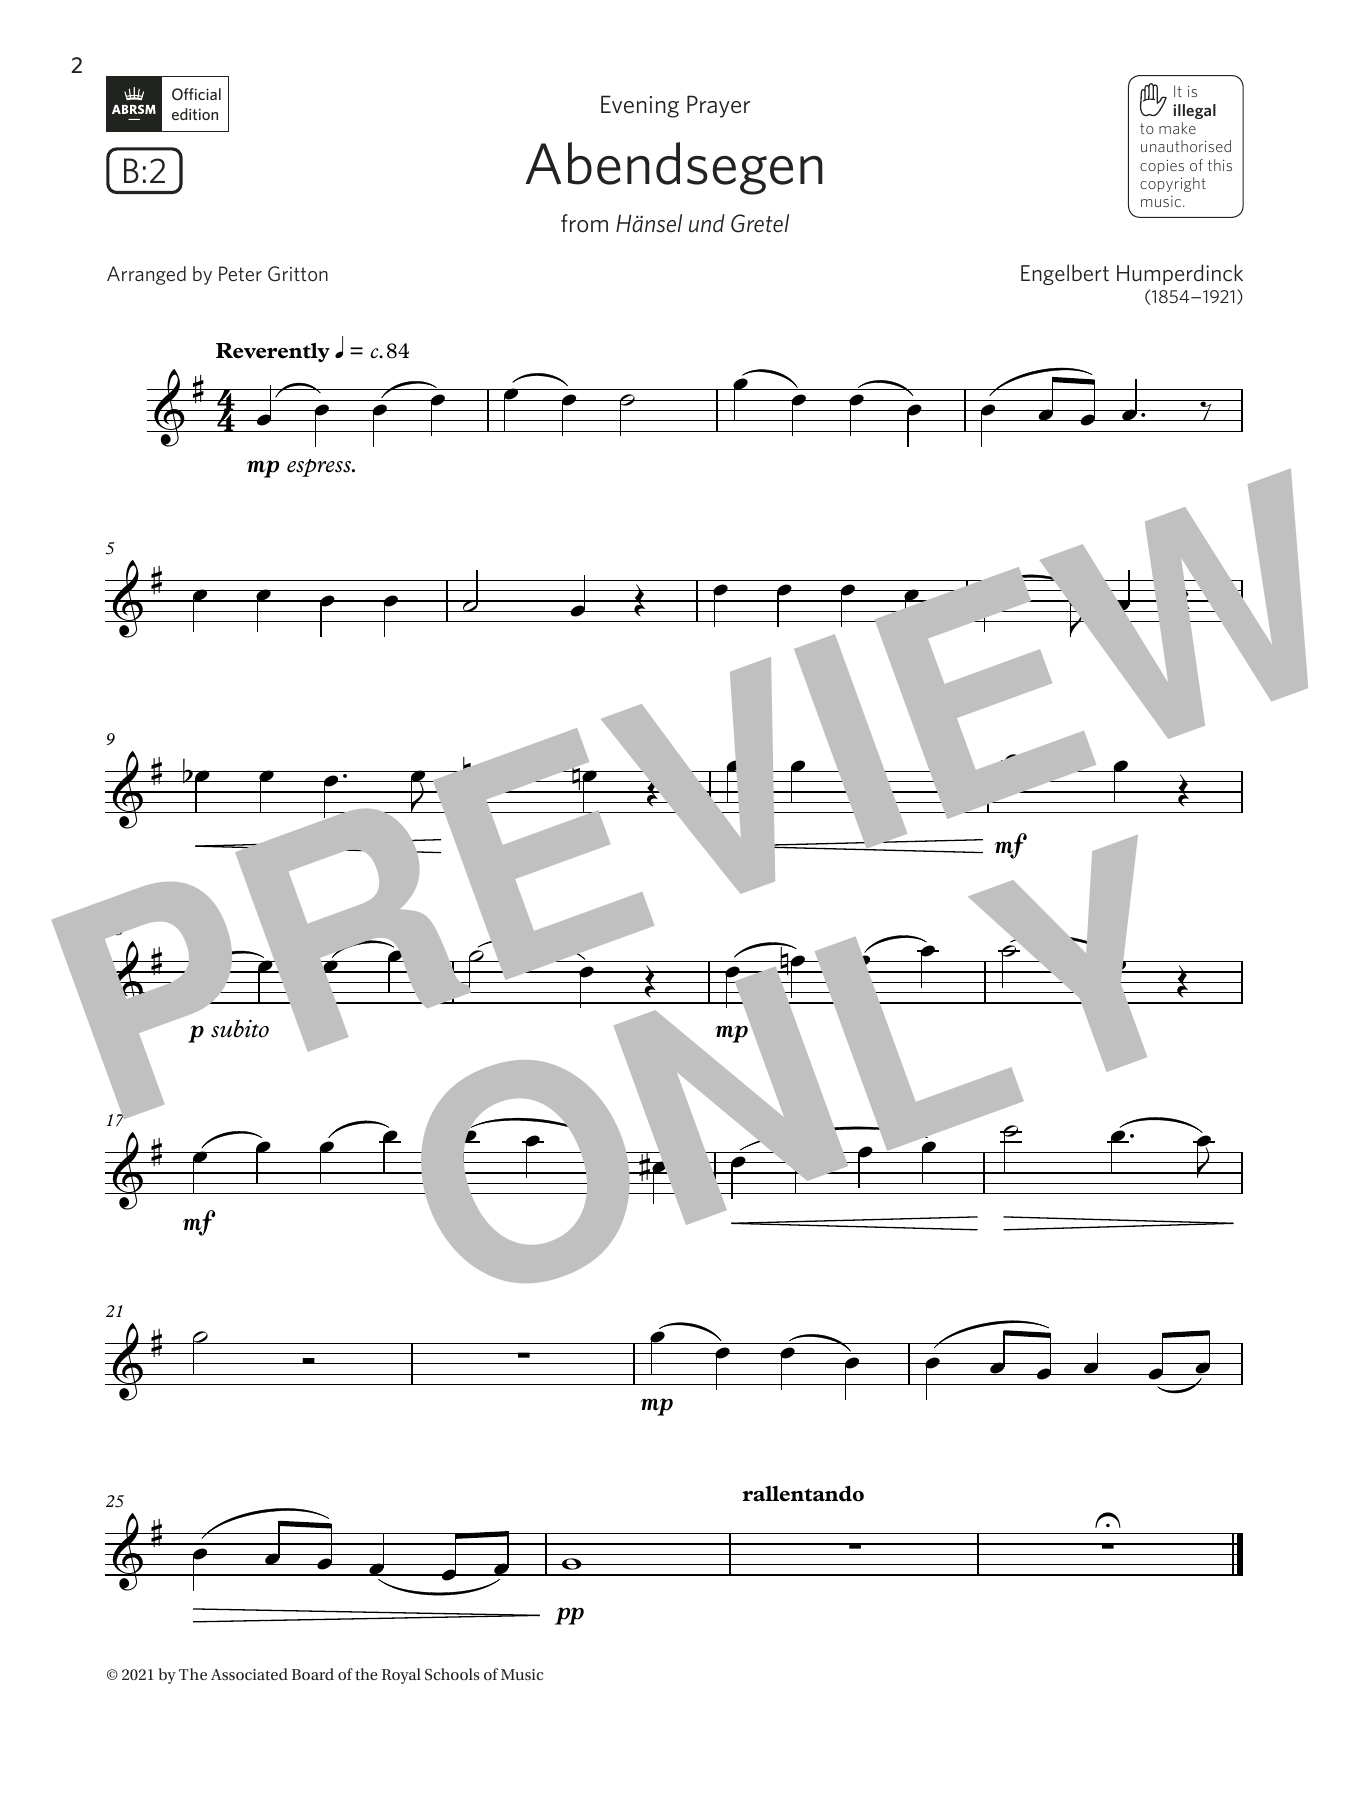 Engelbert Humperdinck Abendsegen (from Hänsel und Gretel) (Grade 2 List B2 from the ABRSM Saxophone syllabus from 2022) Sheet Music Notes & Chords for Alto Sax Solo - Download or Print PDF